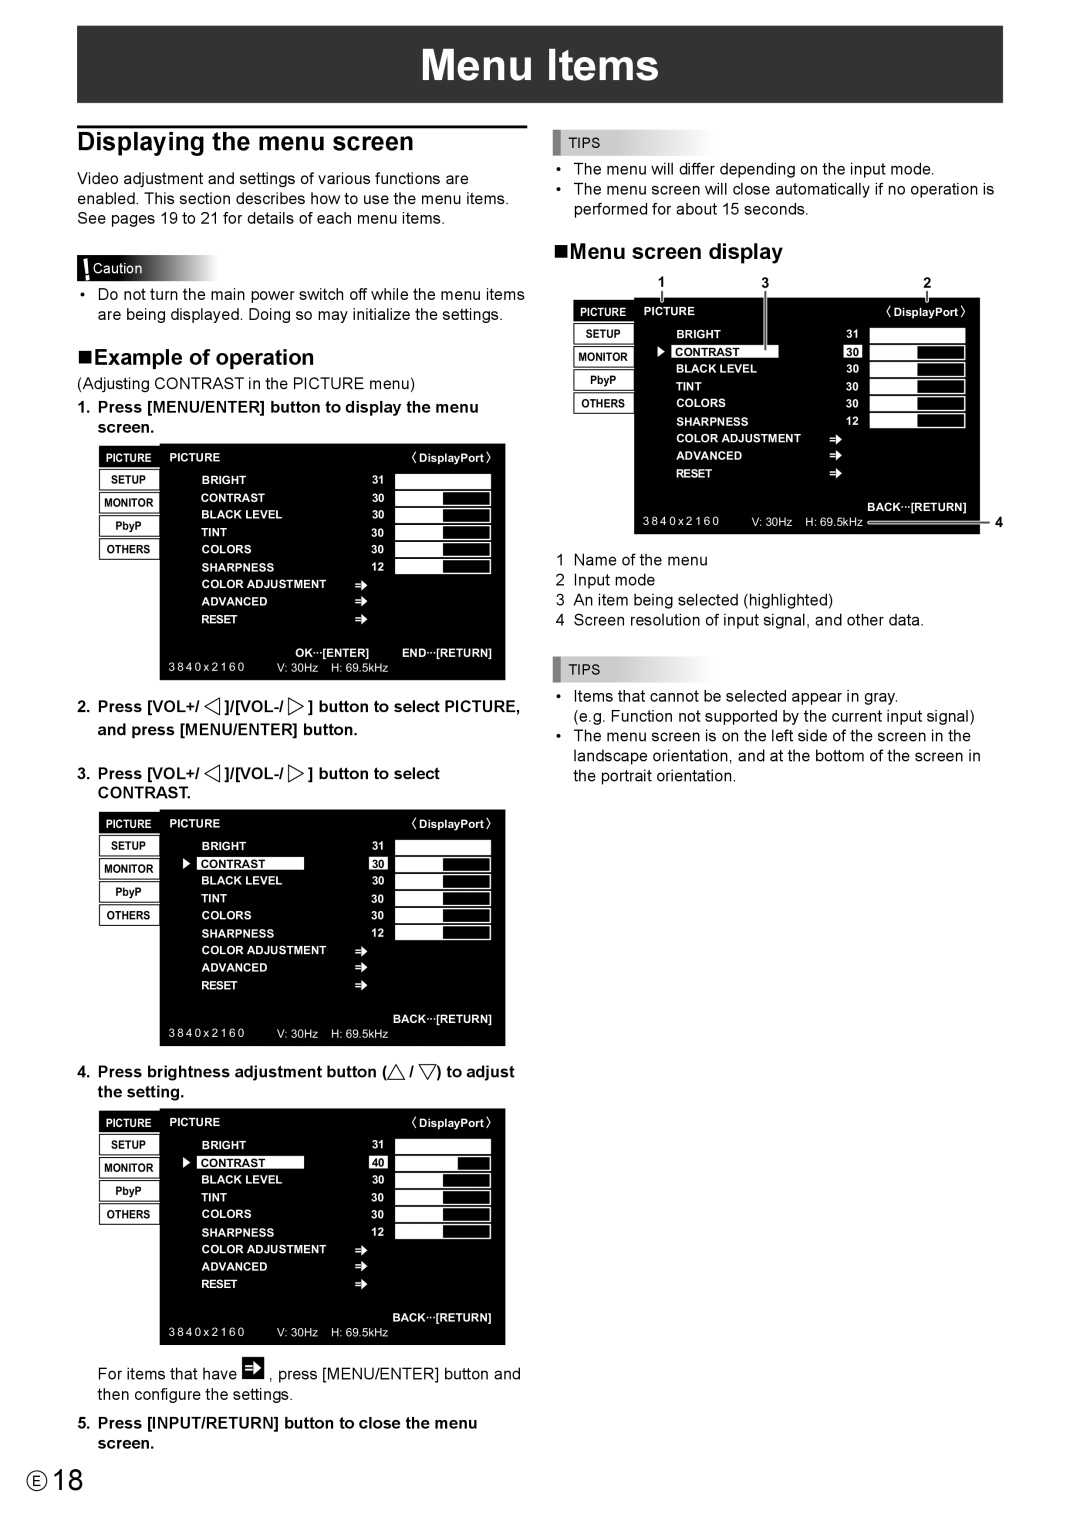 Sharp PN-K321 operation manual Menu Items, Displaying the menu screen, nExample of operation, nMenu screen display 